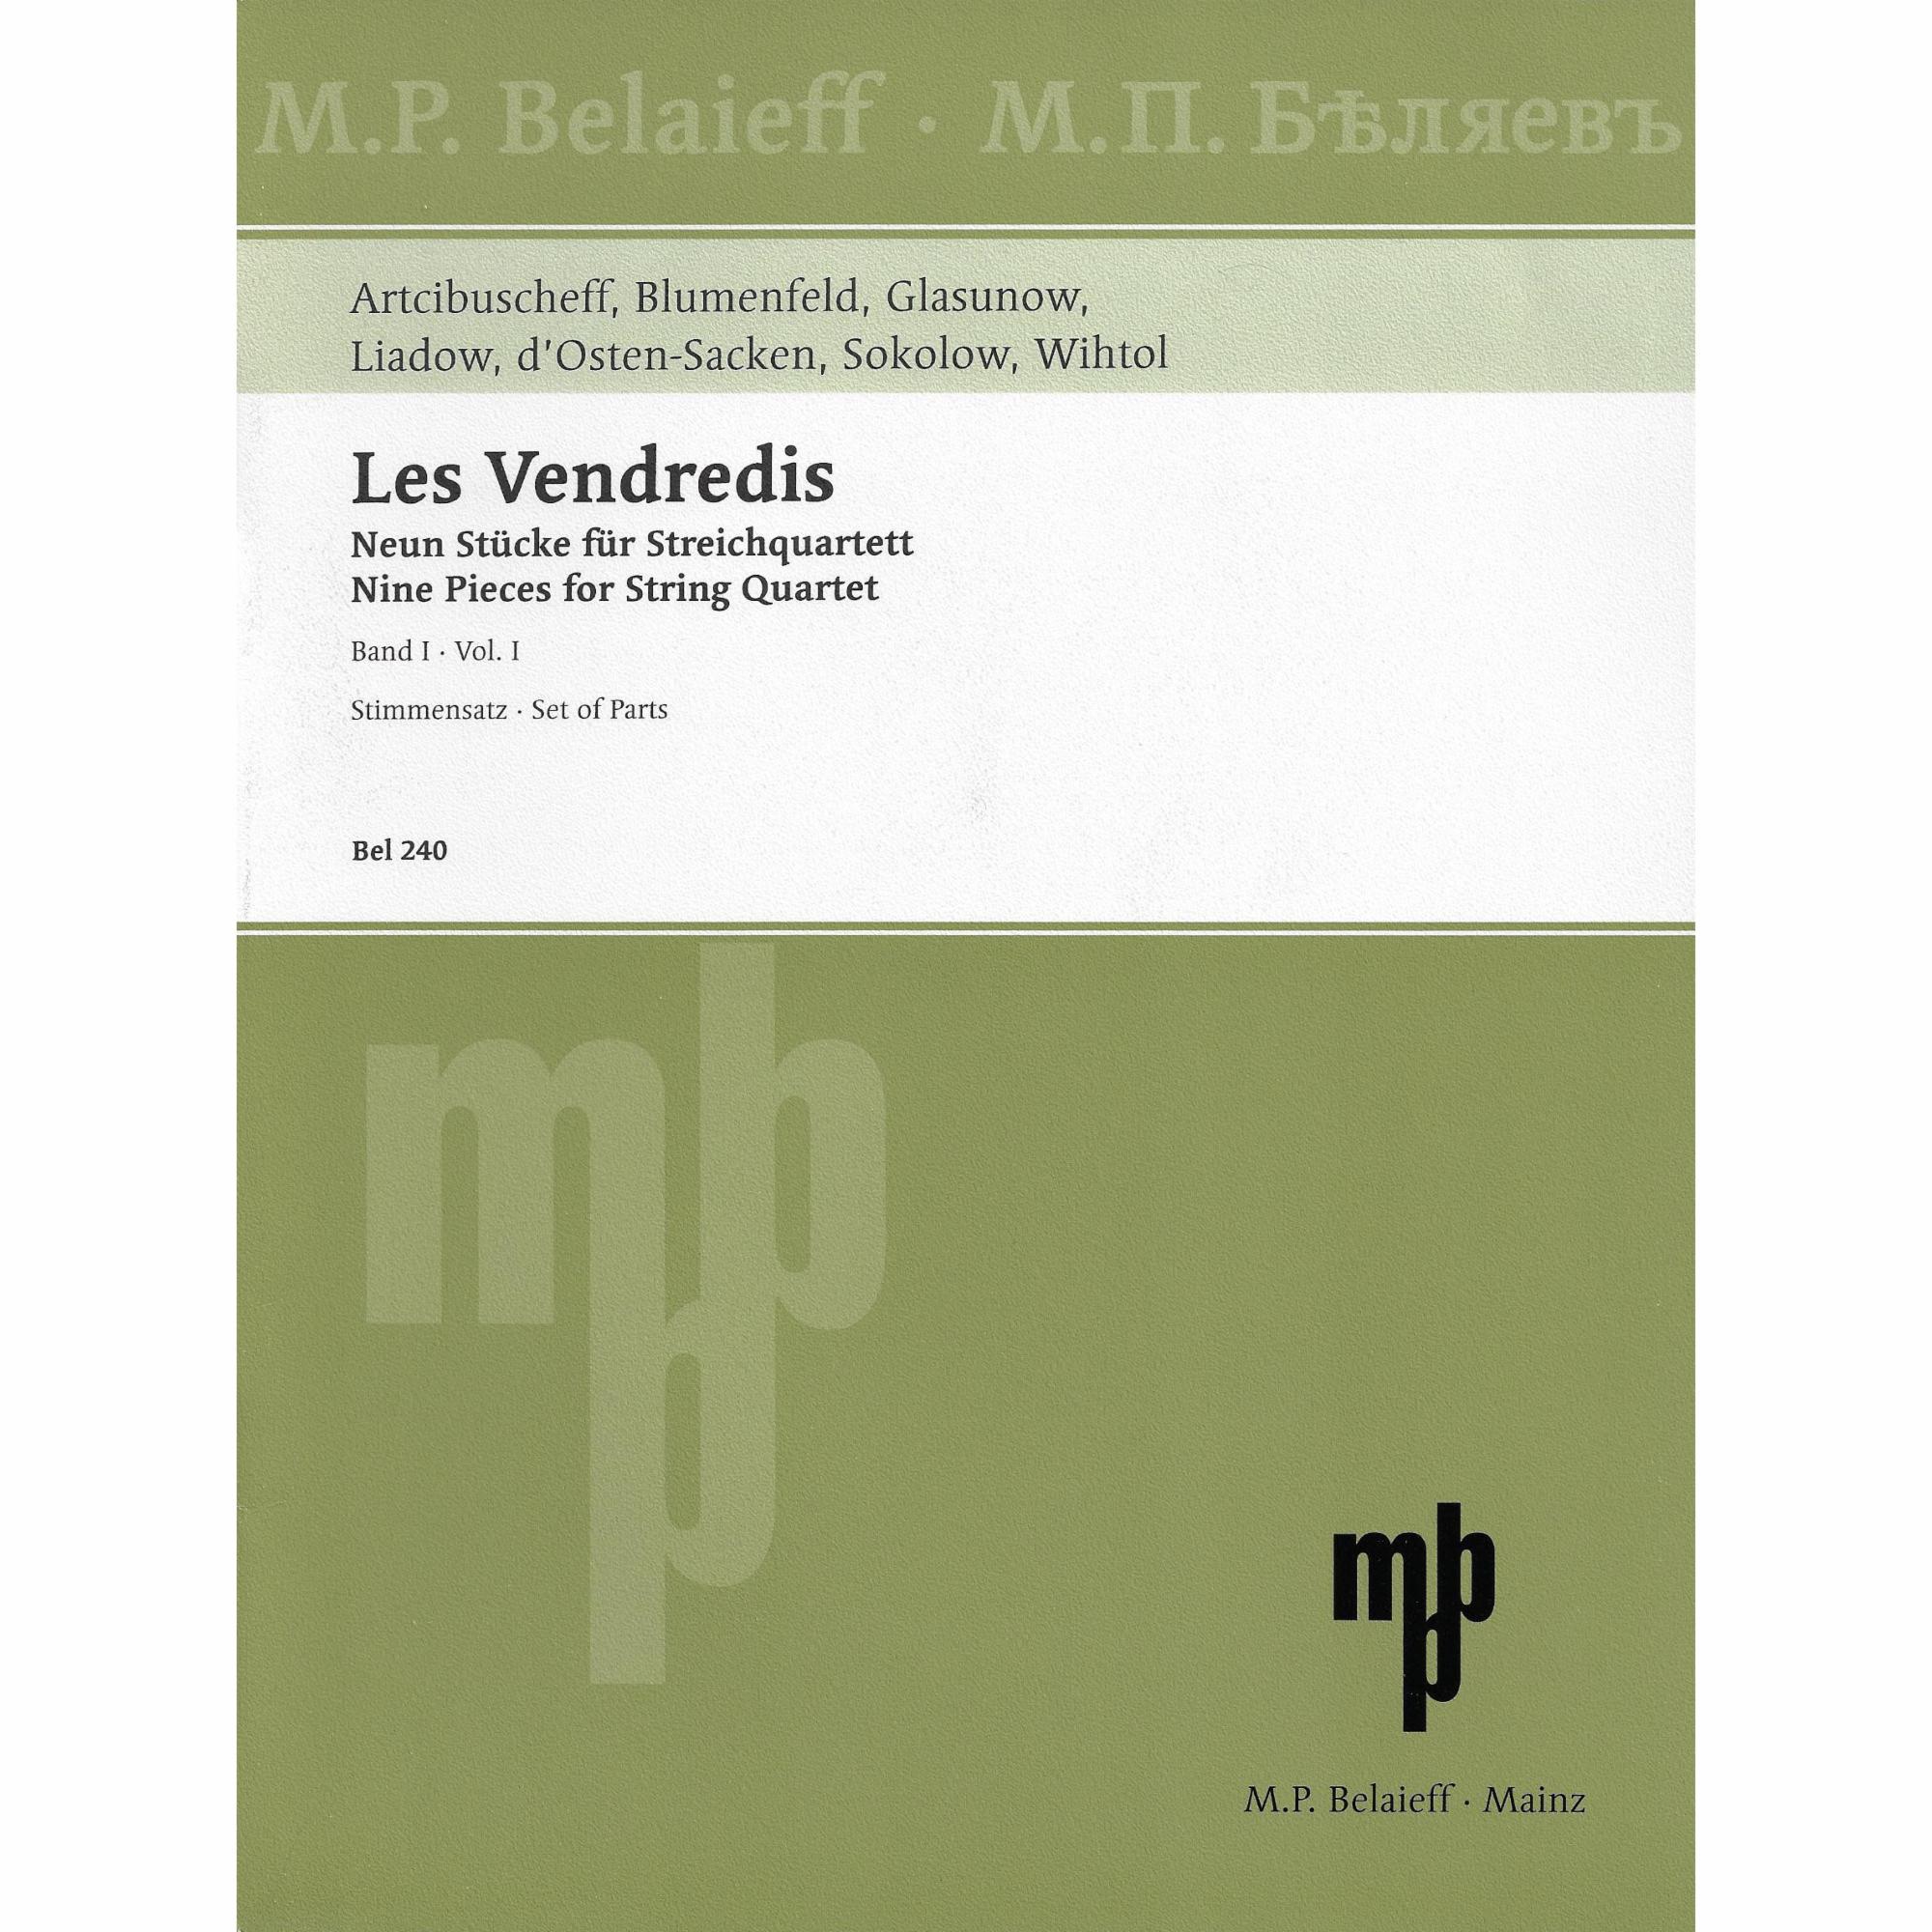 Les Vendredis for String Quartet, Volumes I-II